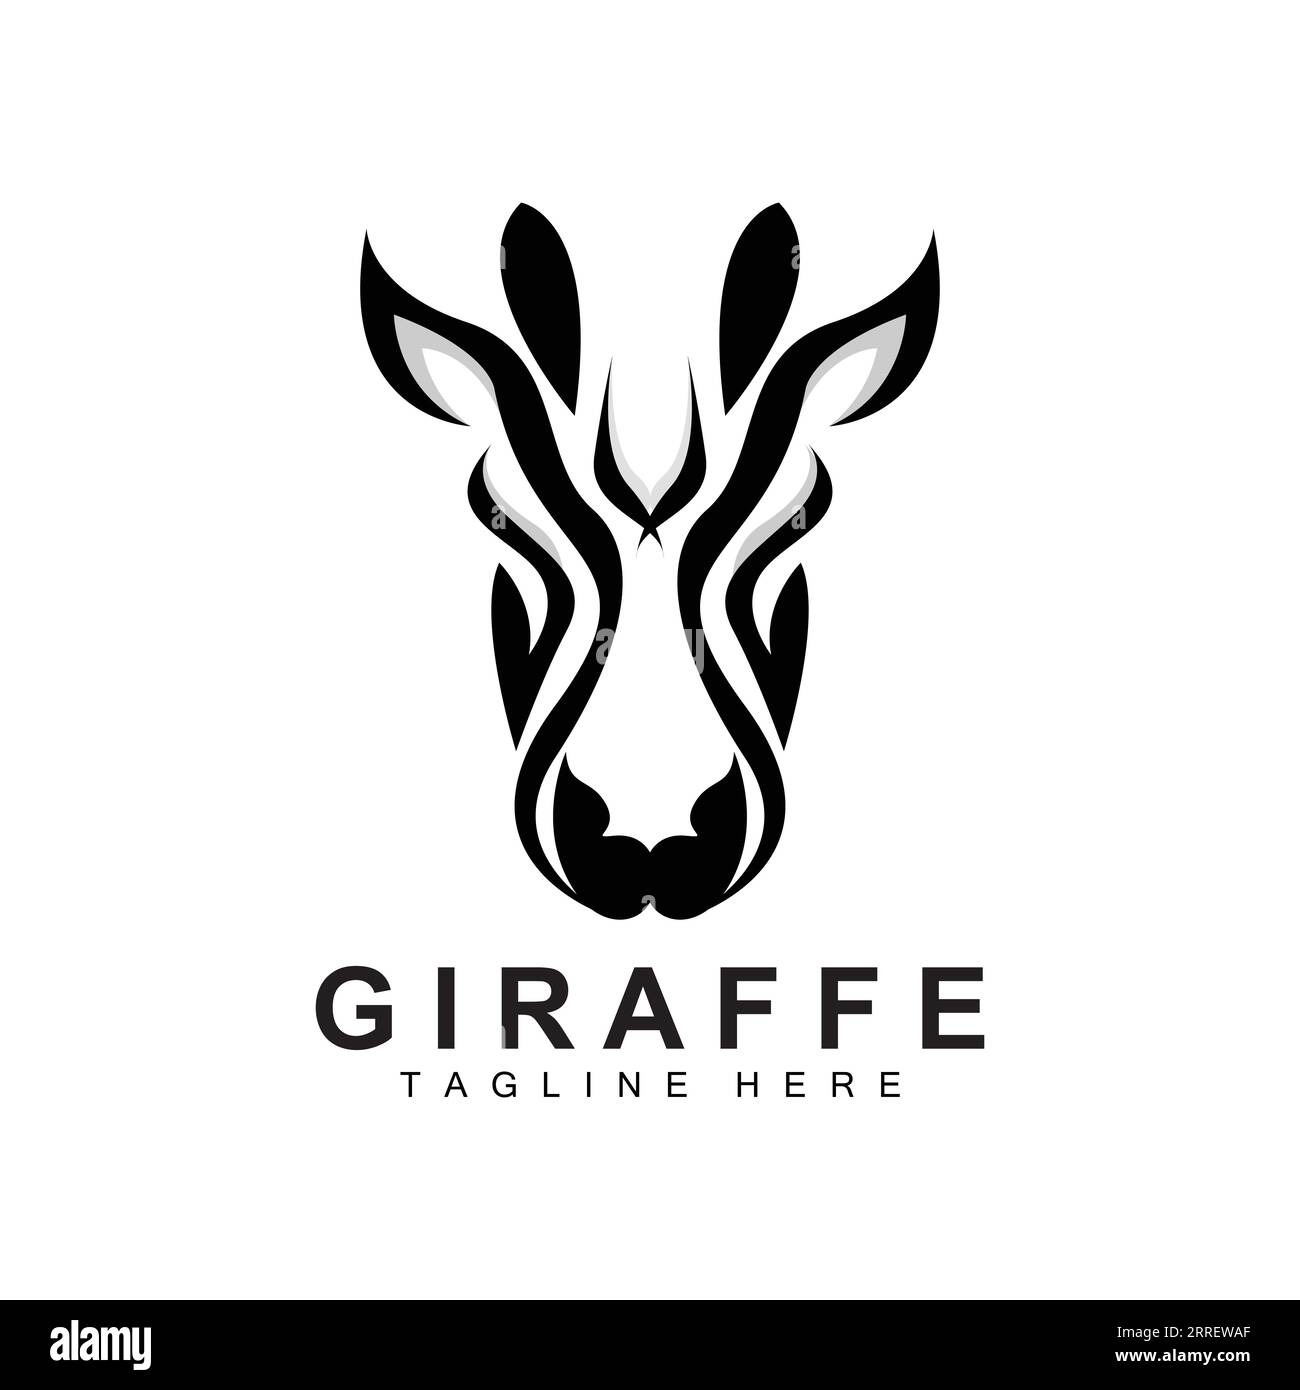 Giraffe Logo Design, Giraffe Head Vector Silhouette, High Neck Animal, Zoo, Tattoo Illustration, Product Brand Stock Vector